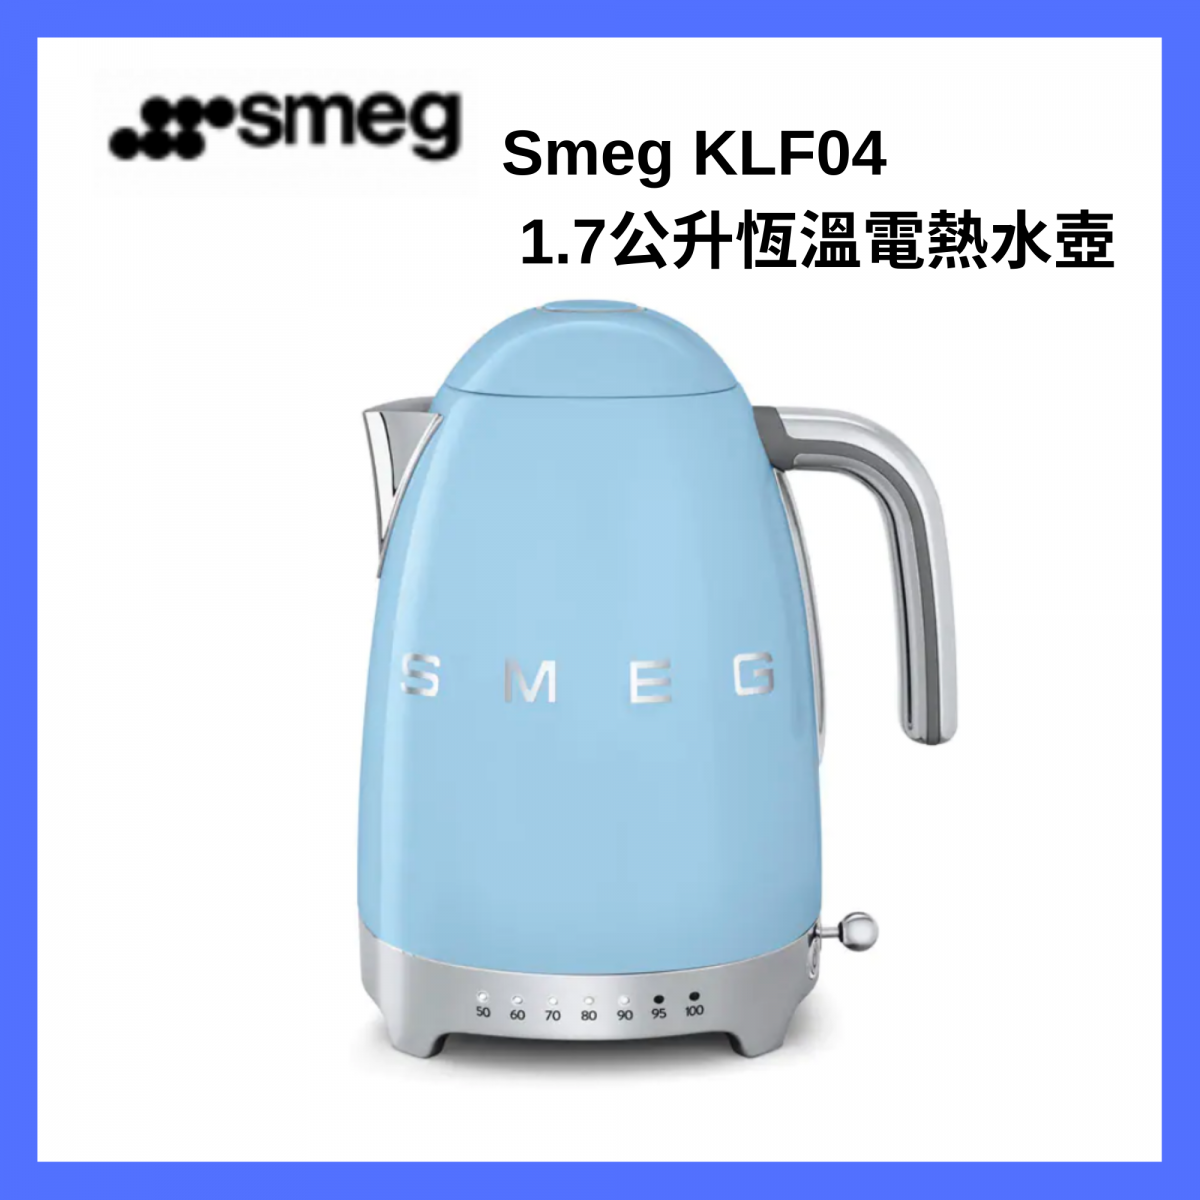 Smeg - Kettle KLF04 (variable temperature control)